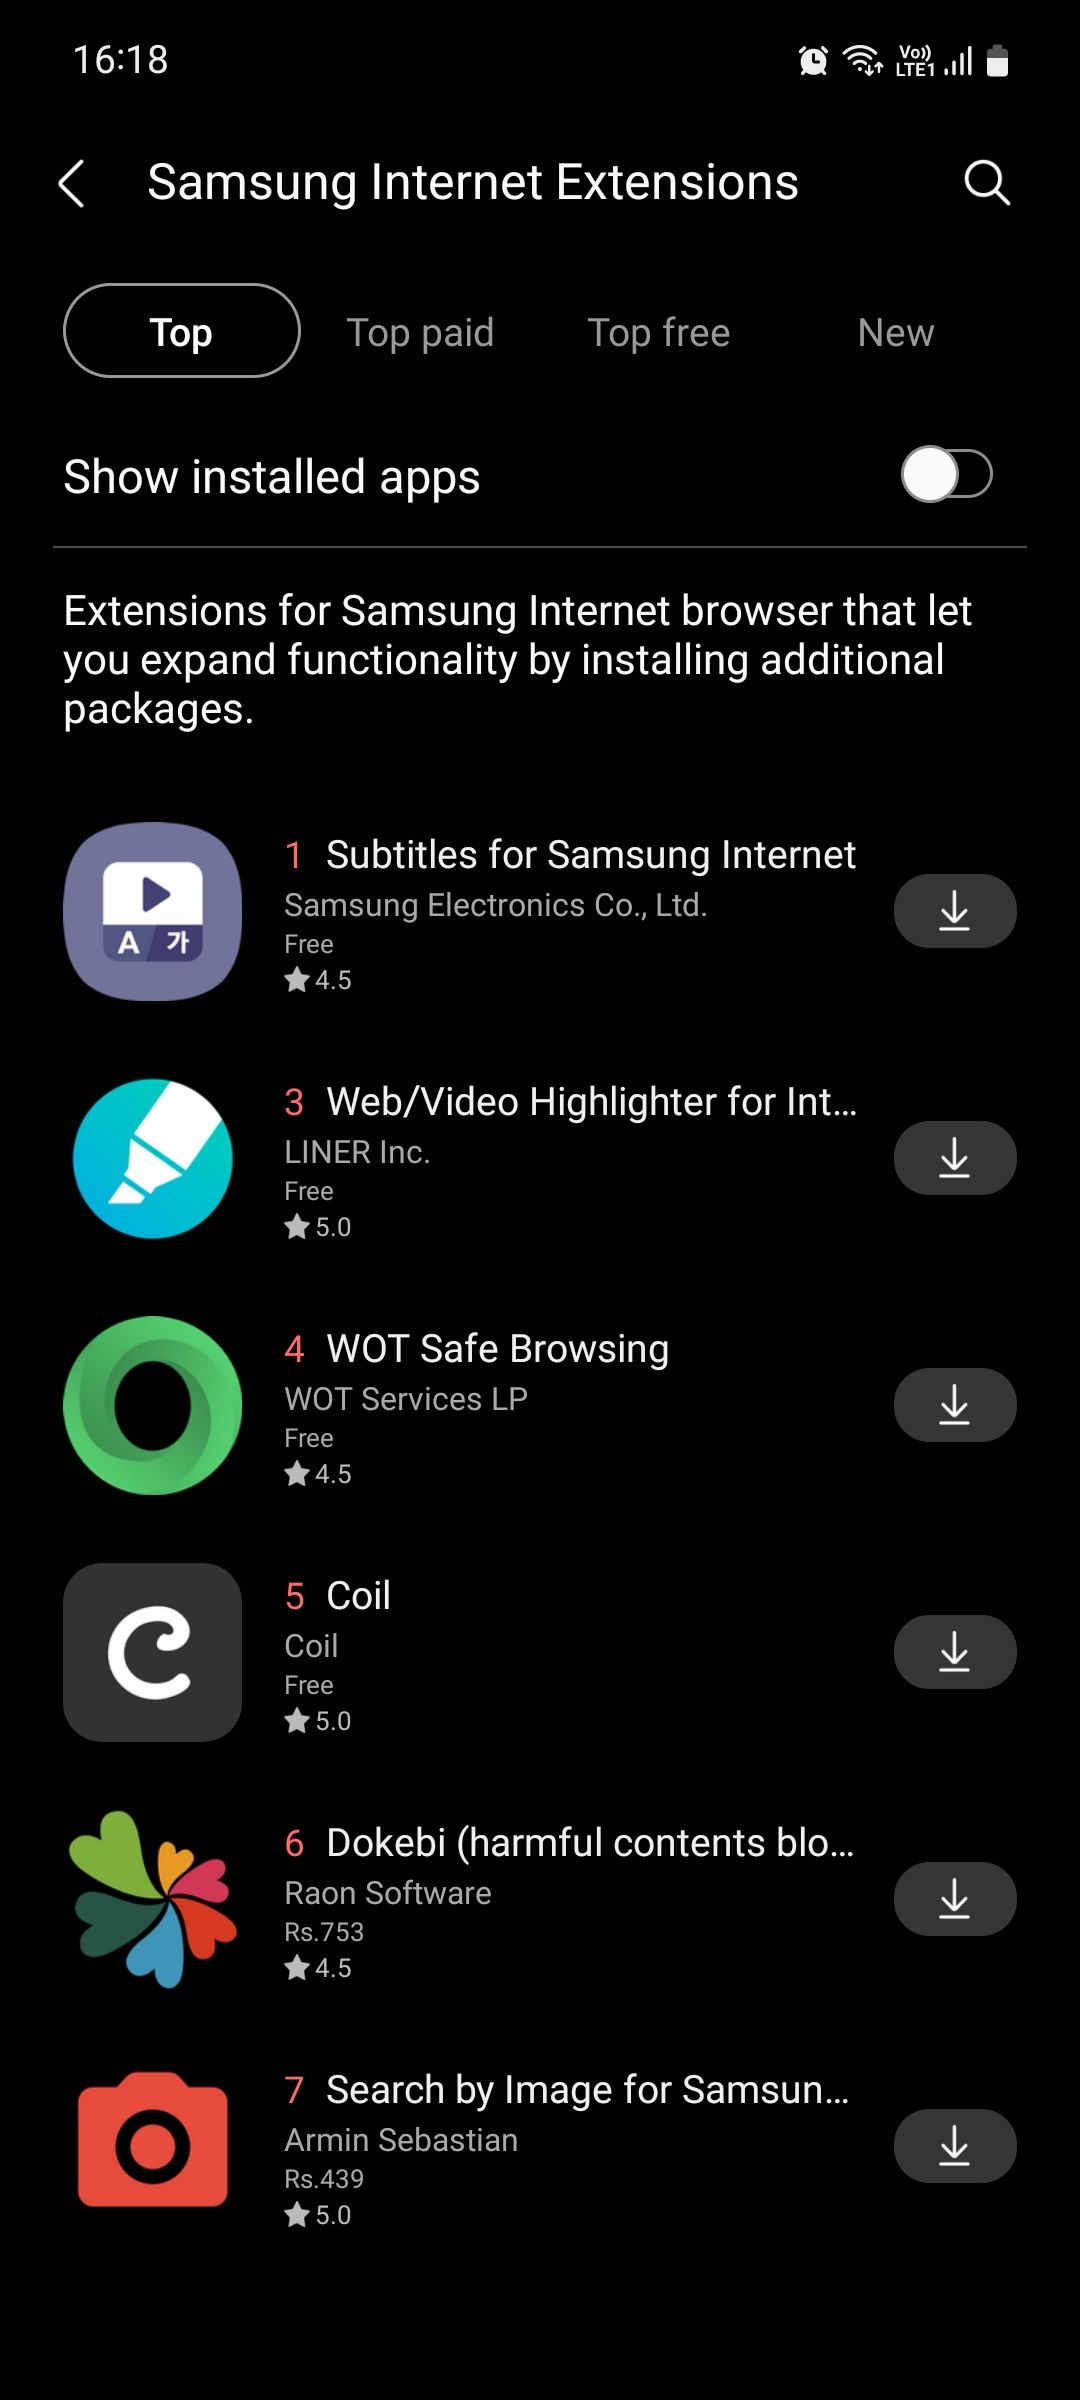 Samsung Internet extensions